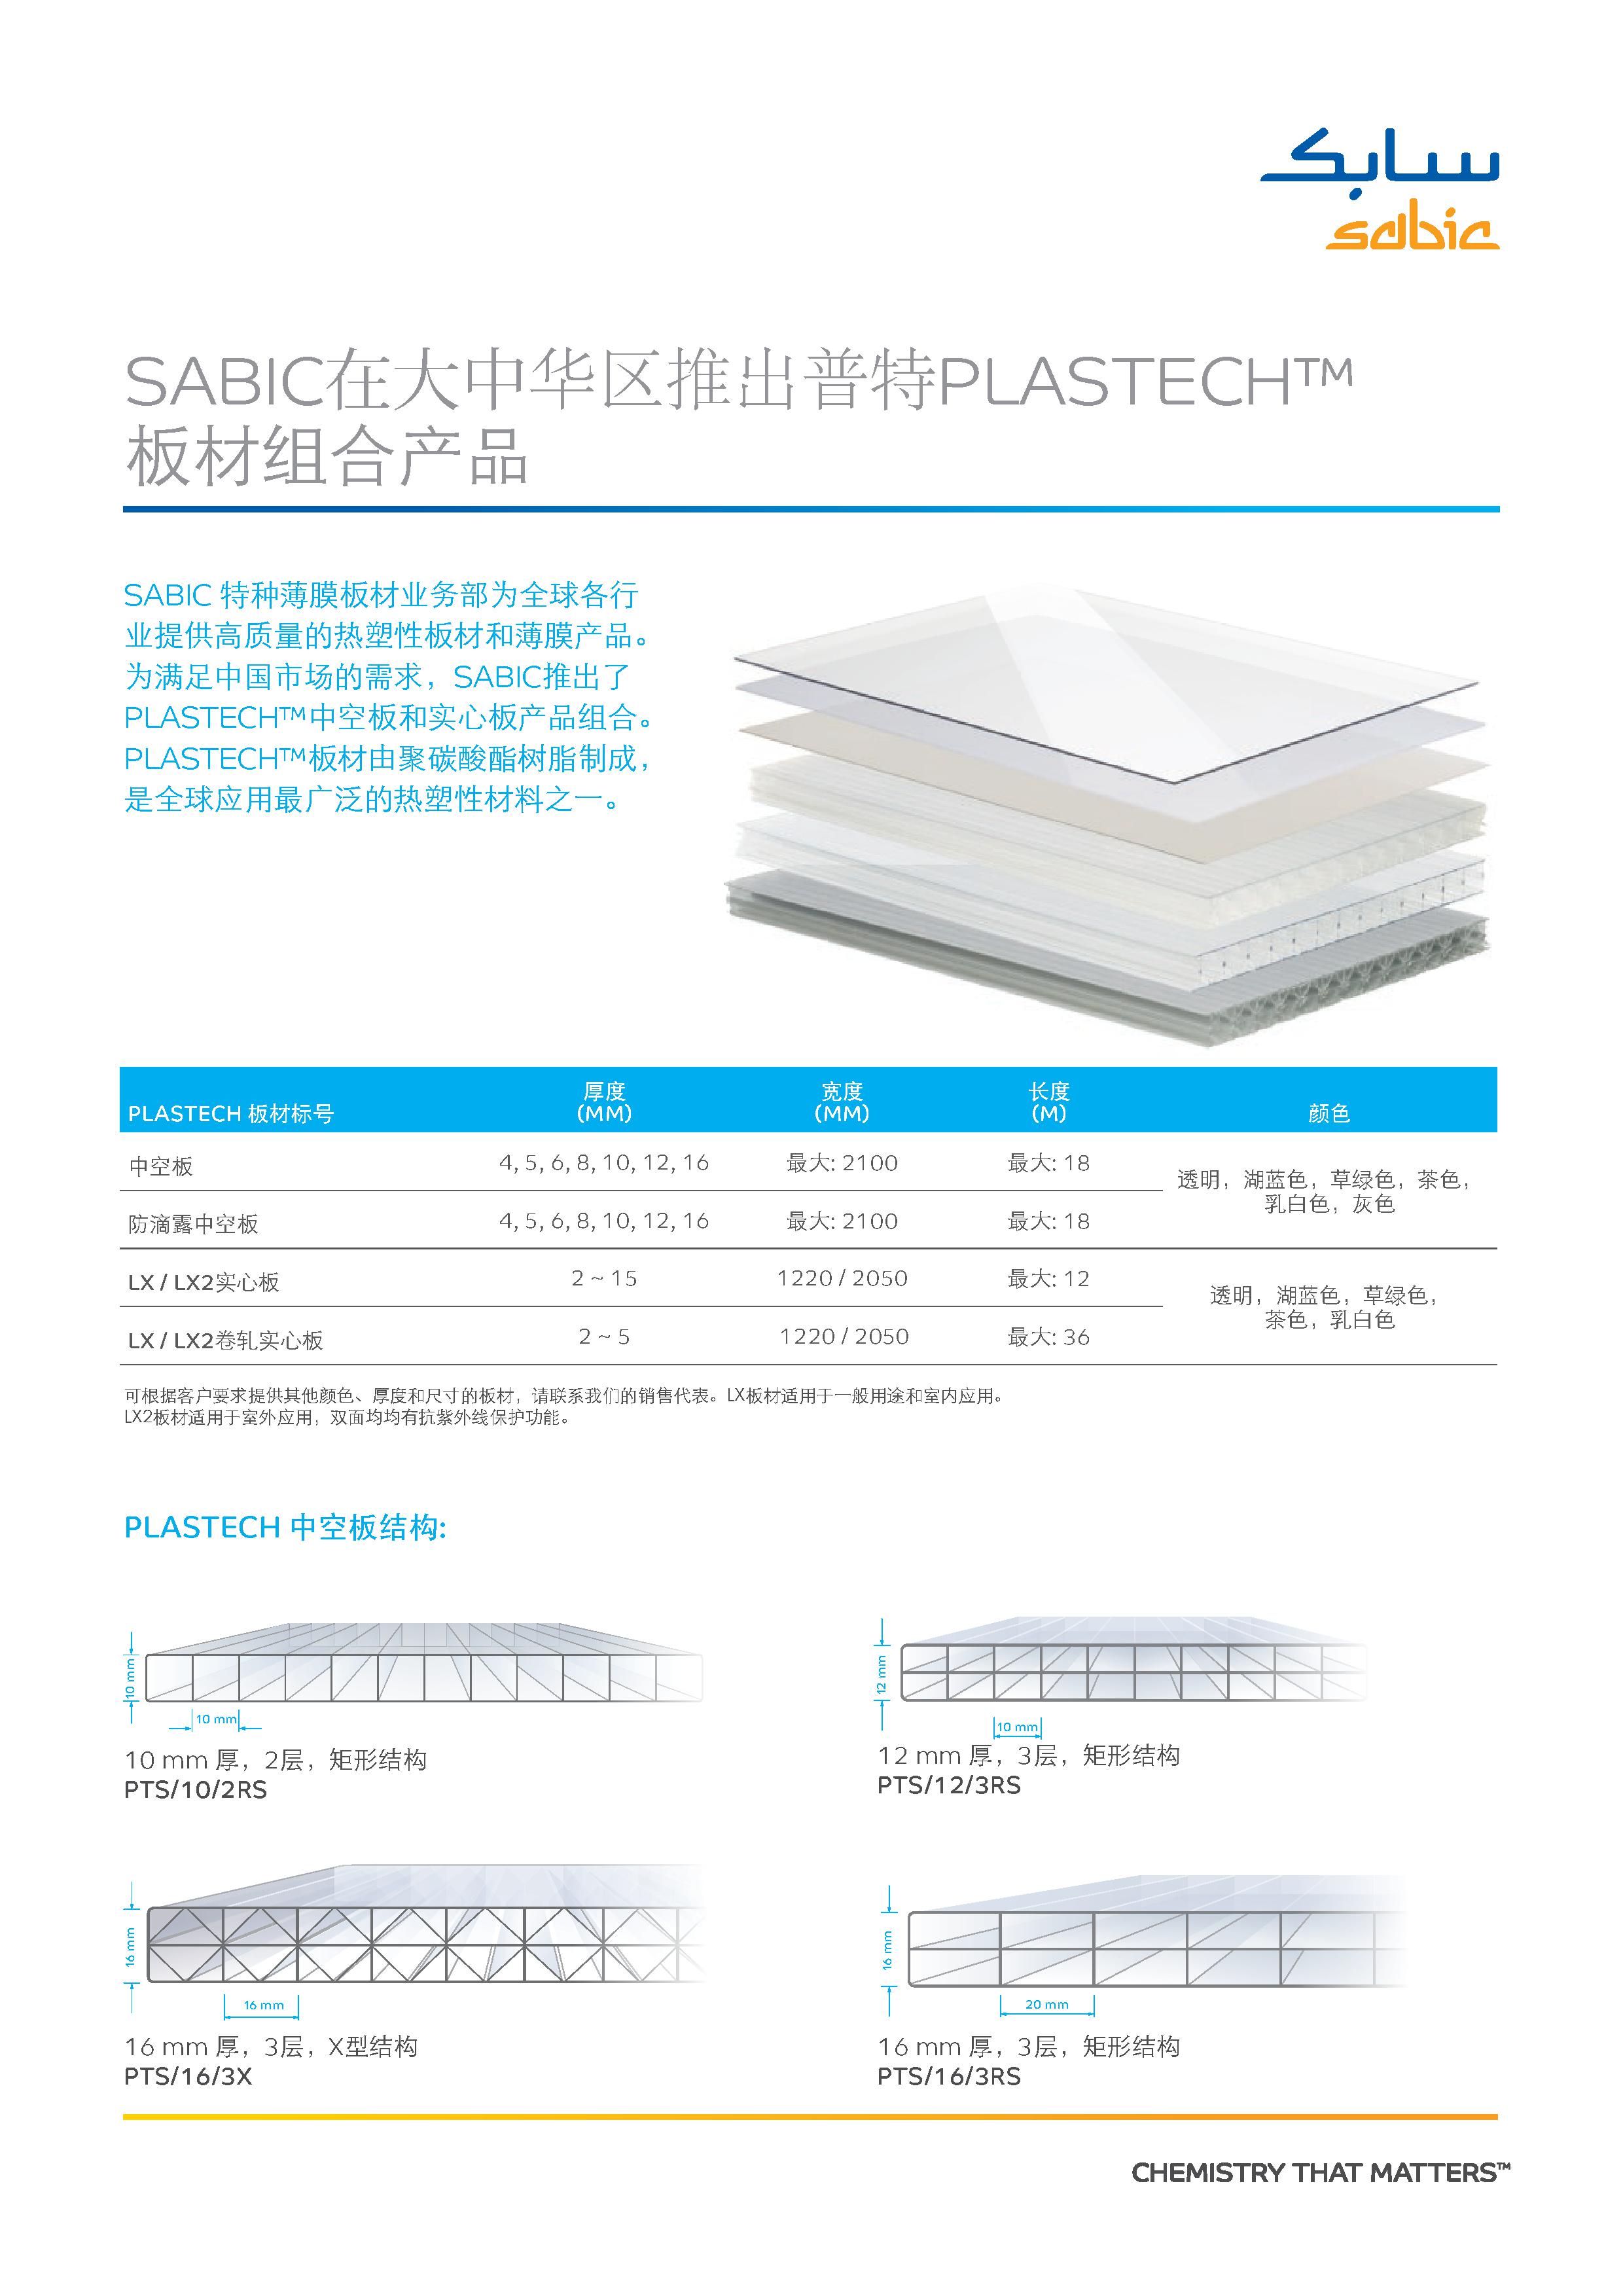 SABIC-FF-25047-Fly Plastech Sheet - Chinese - July 2022-1.jpg